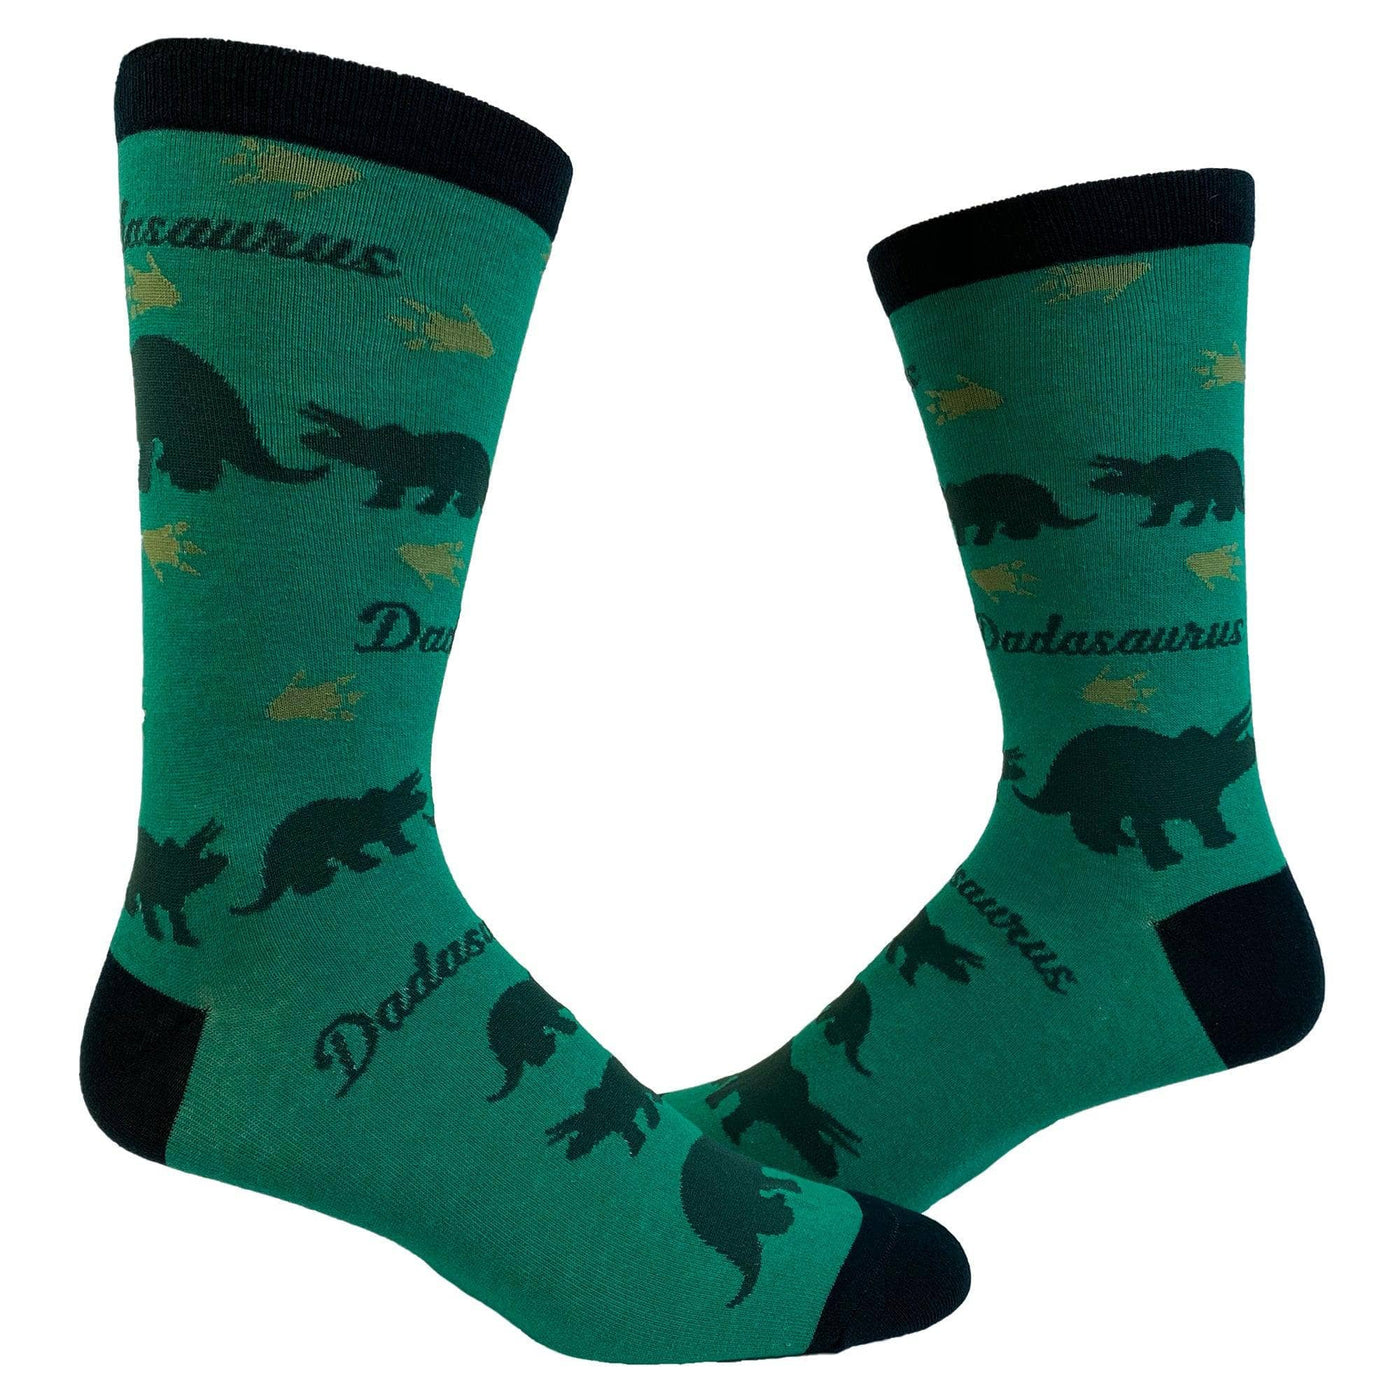 Men's Dadasaurus green Socks